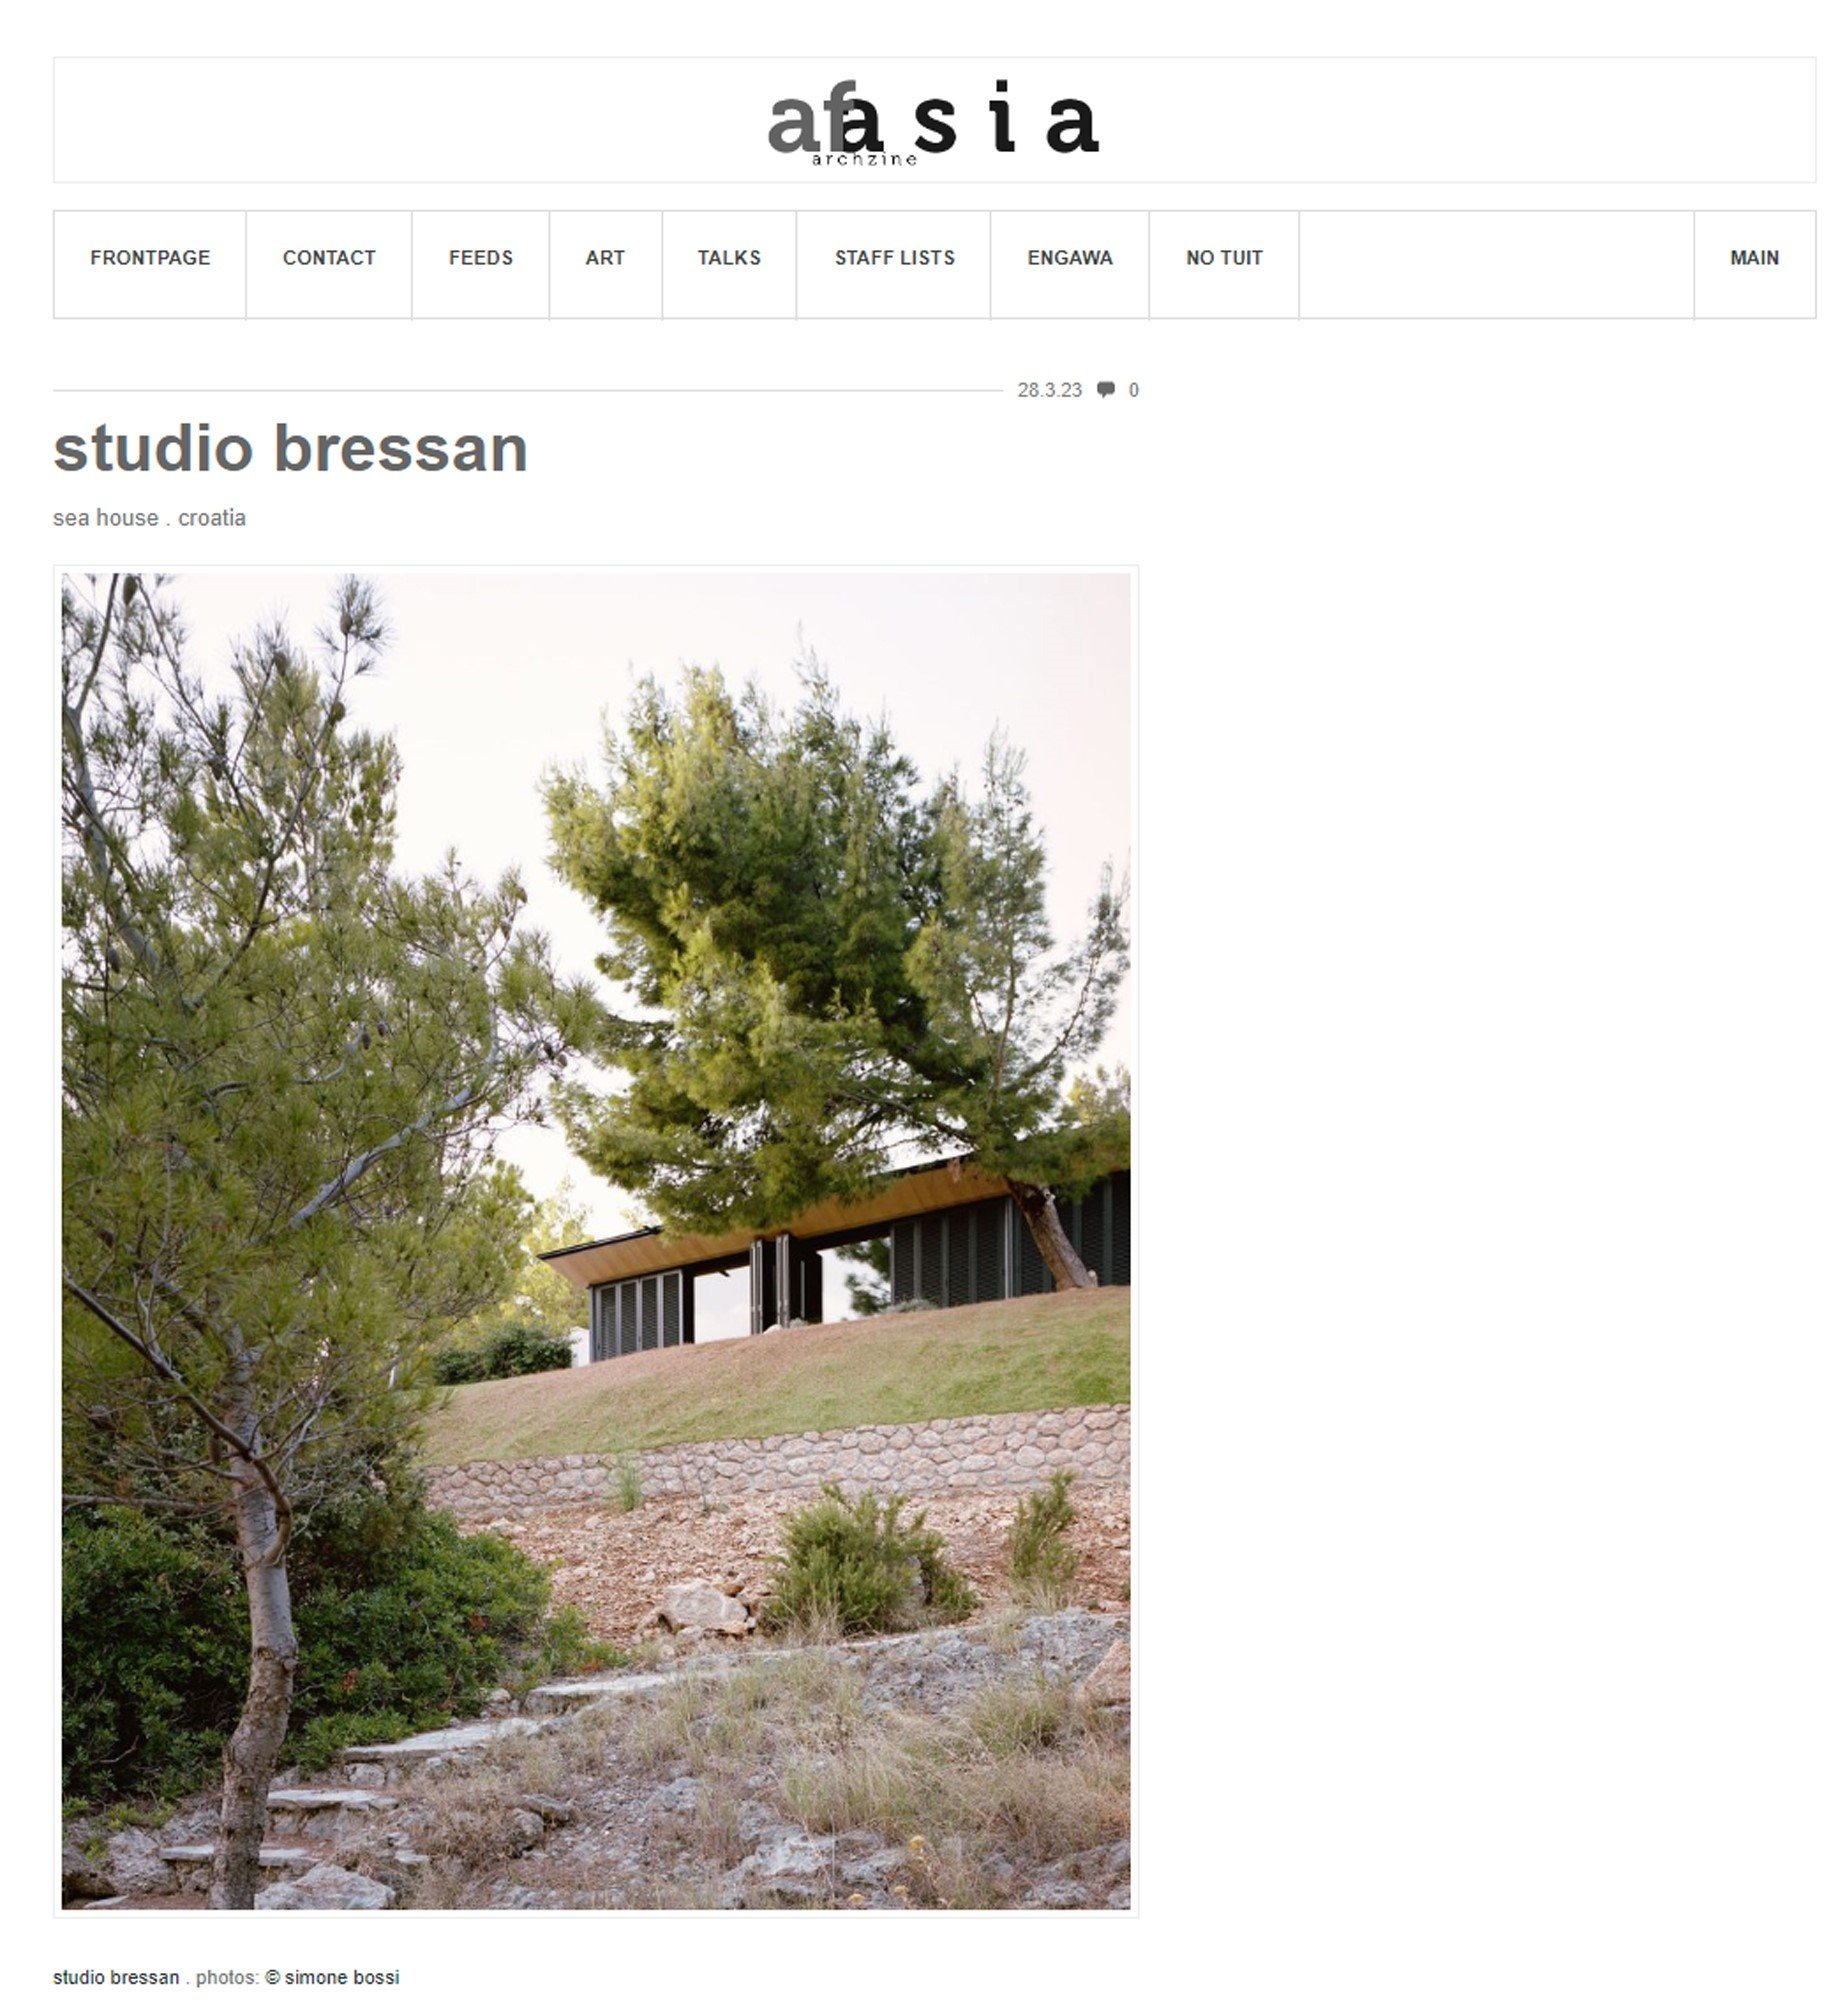 1A Afasia - Sea House_Studio Bressan.jpg